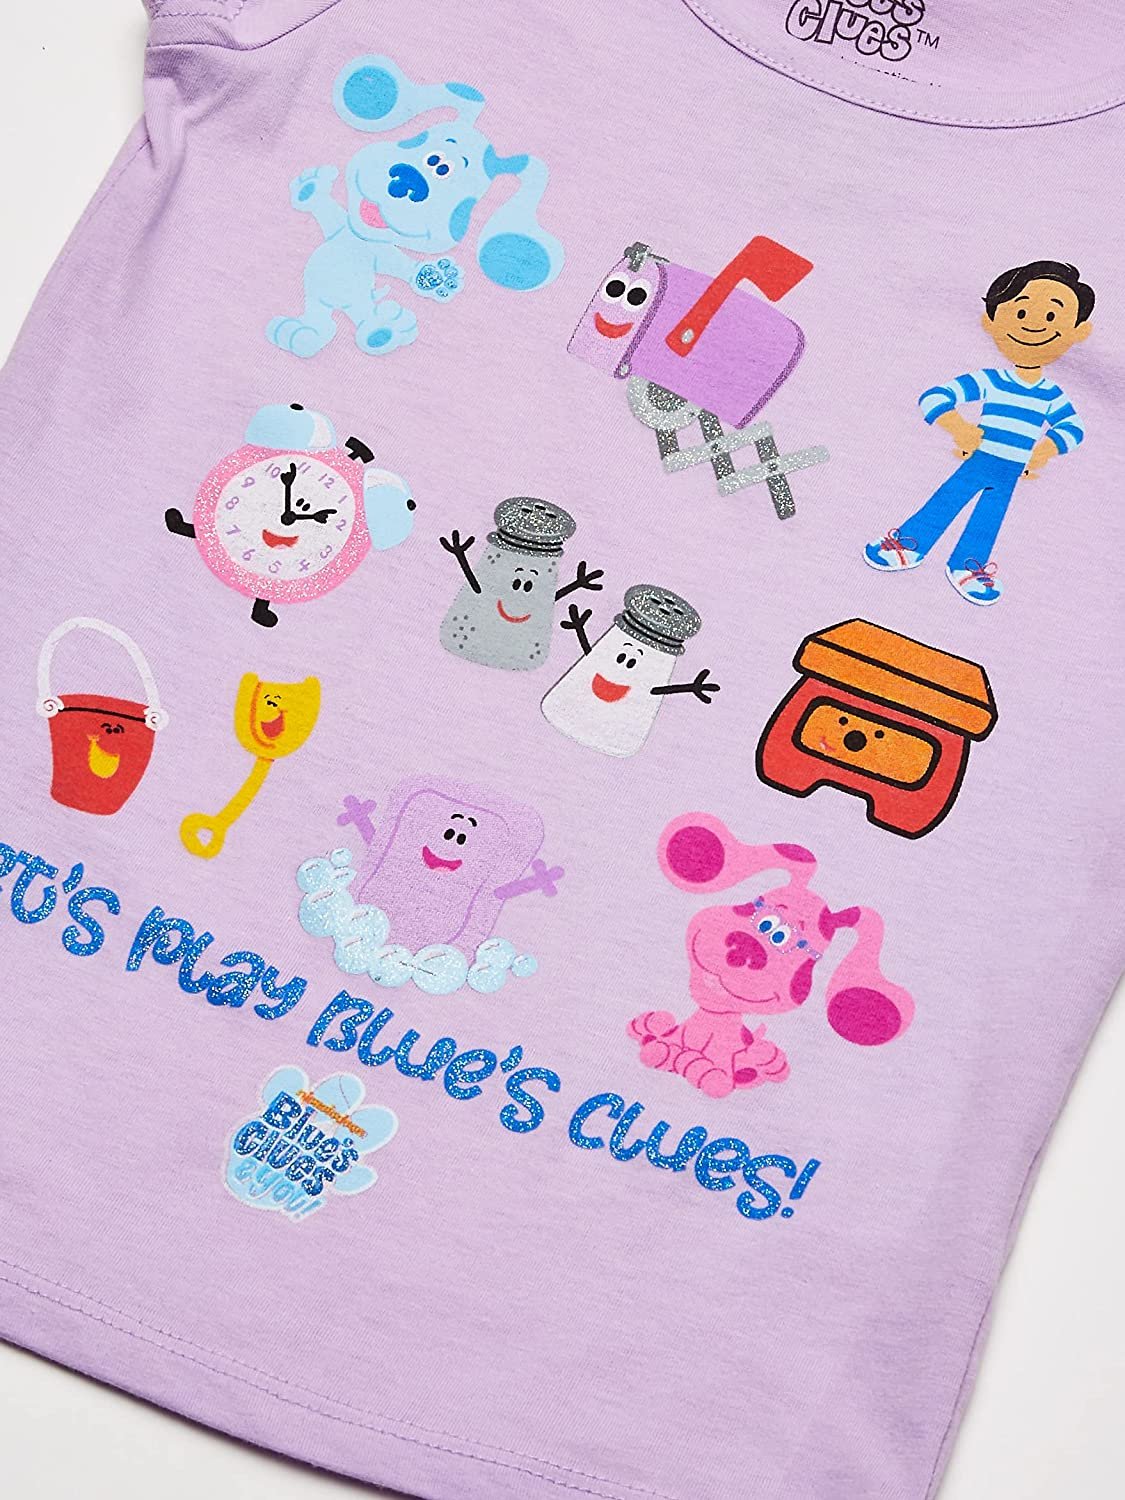 Nickelodeon Blue's Clues & You Character Toddler Girl Short Sleeve Tee-Blue, Josh, Magenta